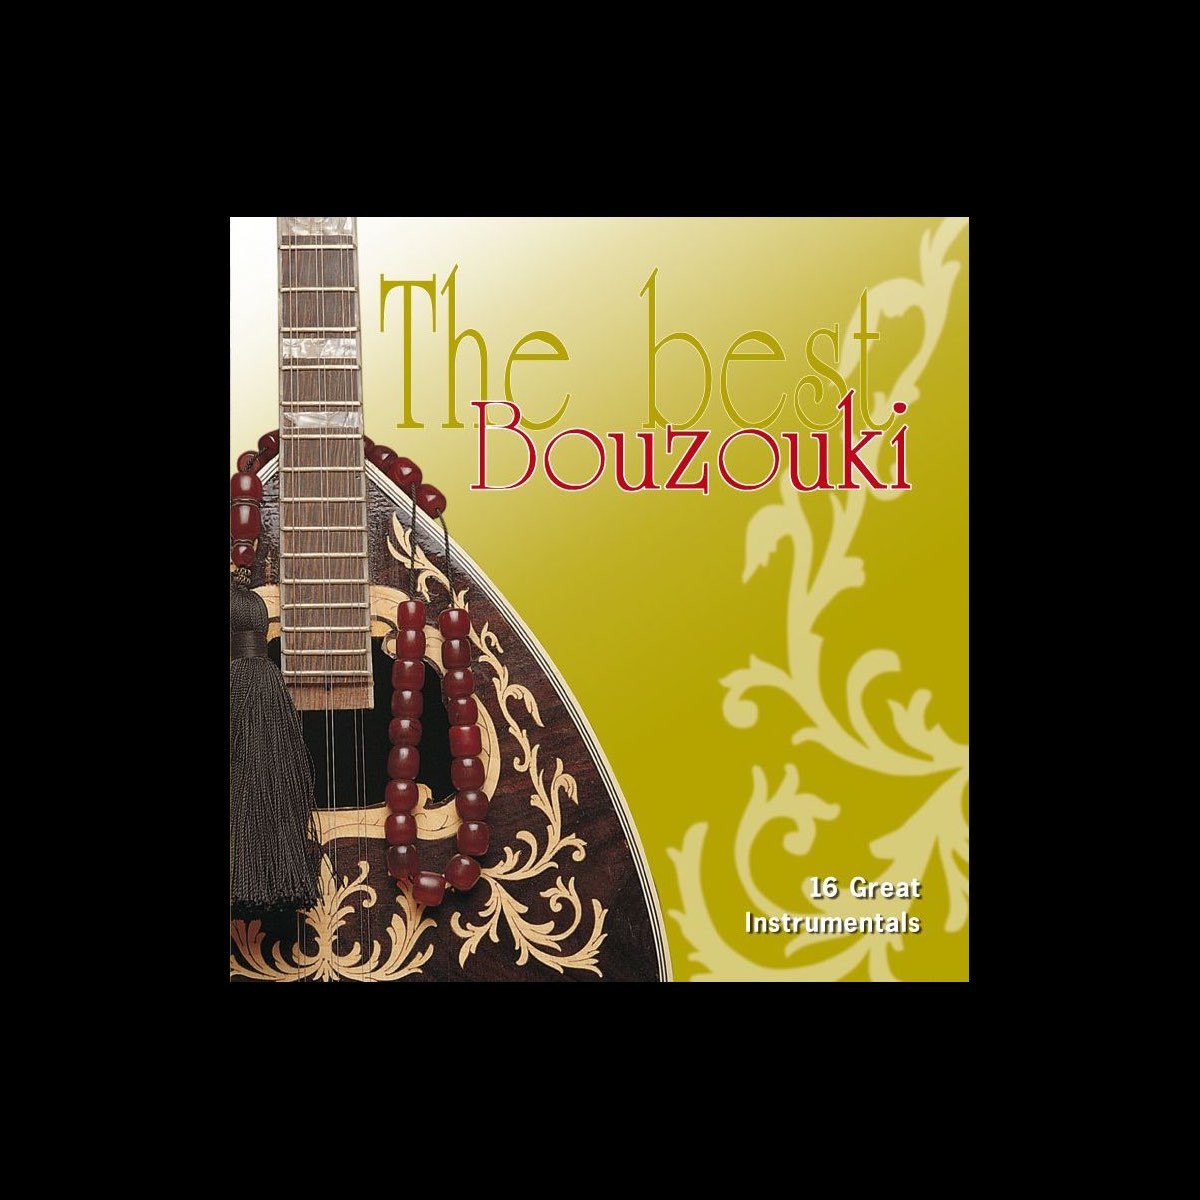 The Best of Bouzouki No2 - Album by Dimitris Xionas - Apple Music